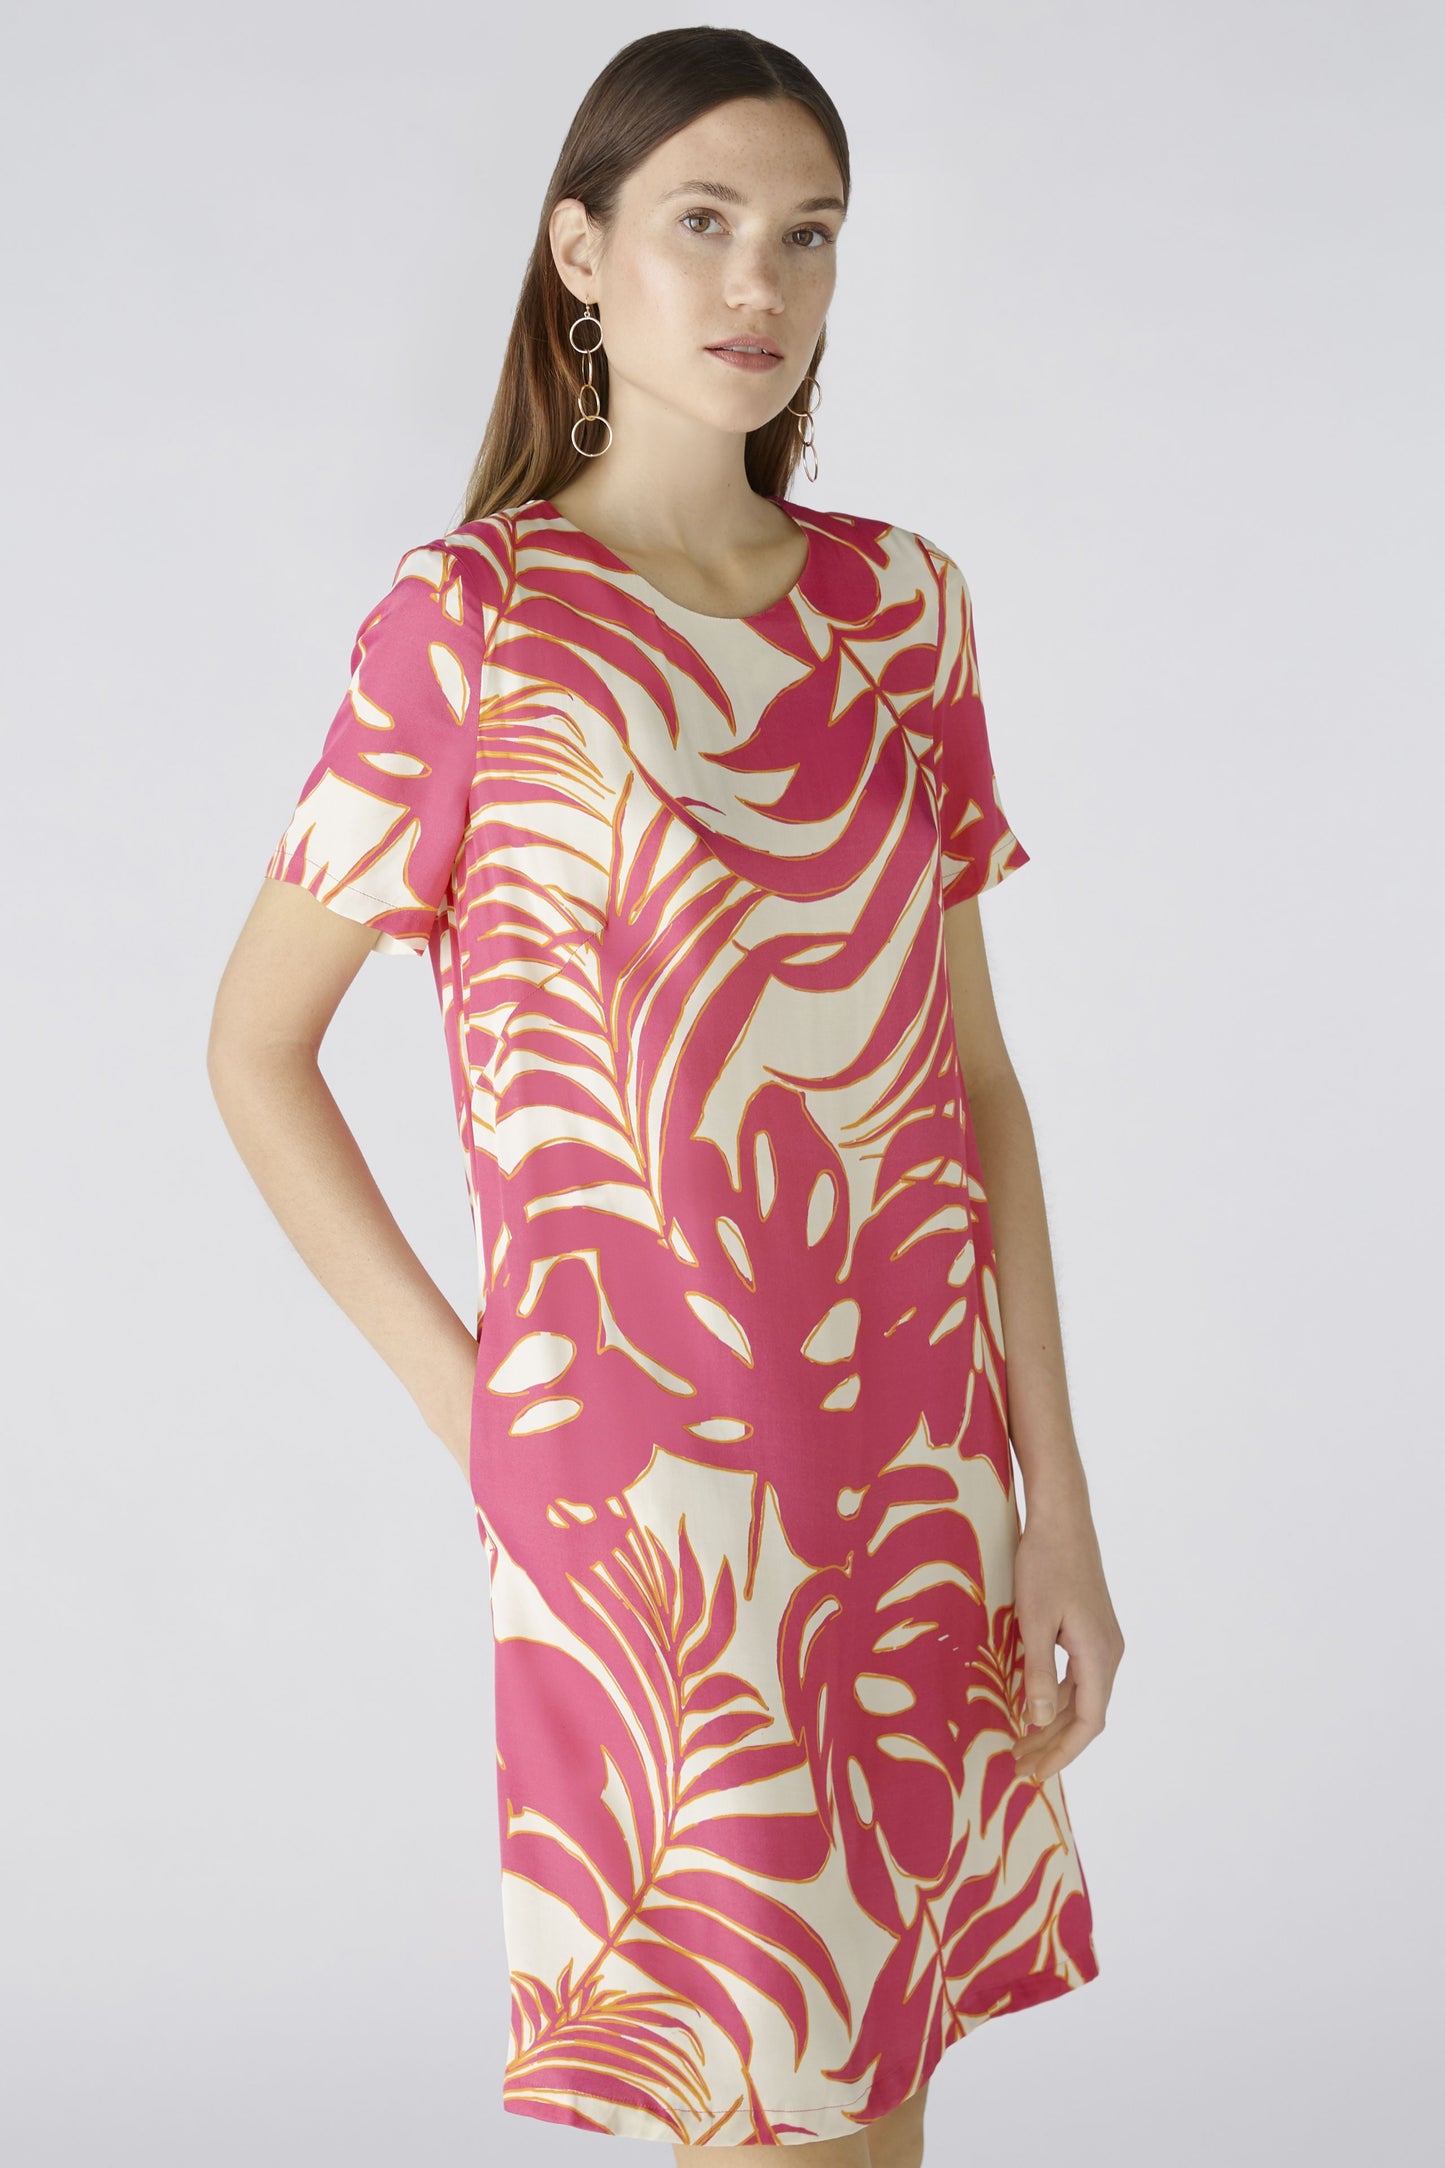 Oui 86713 bold palm print dress